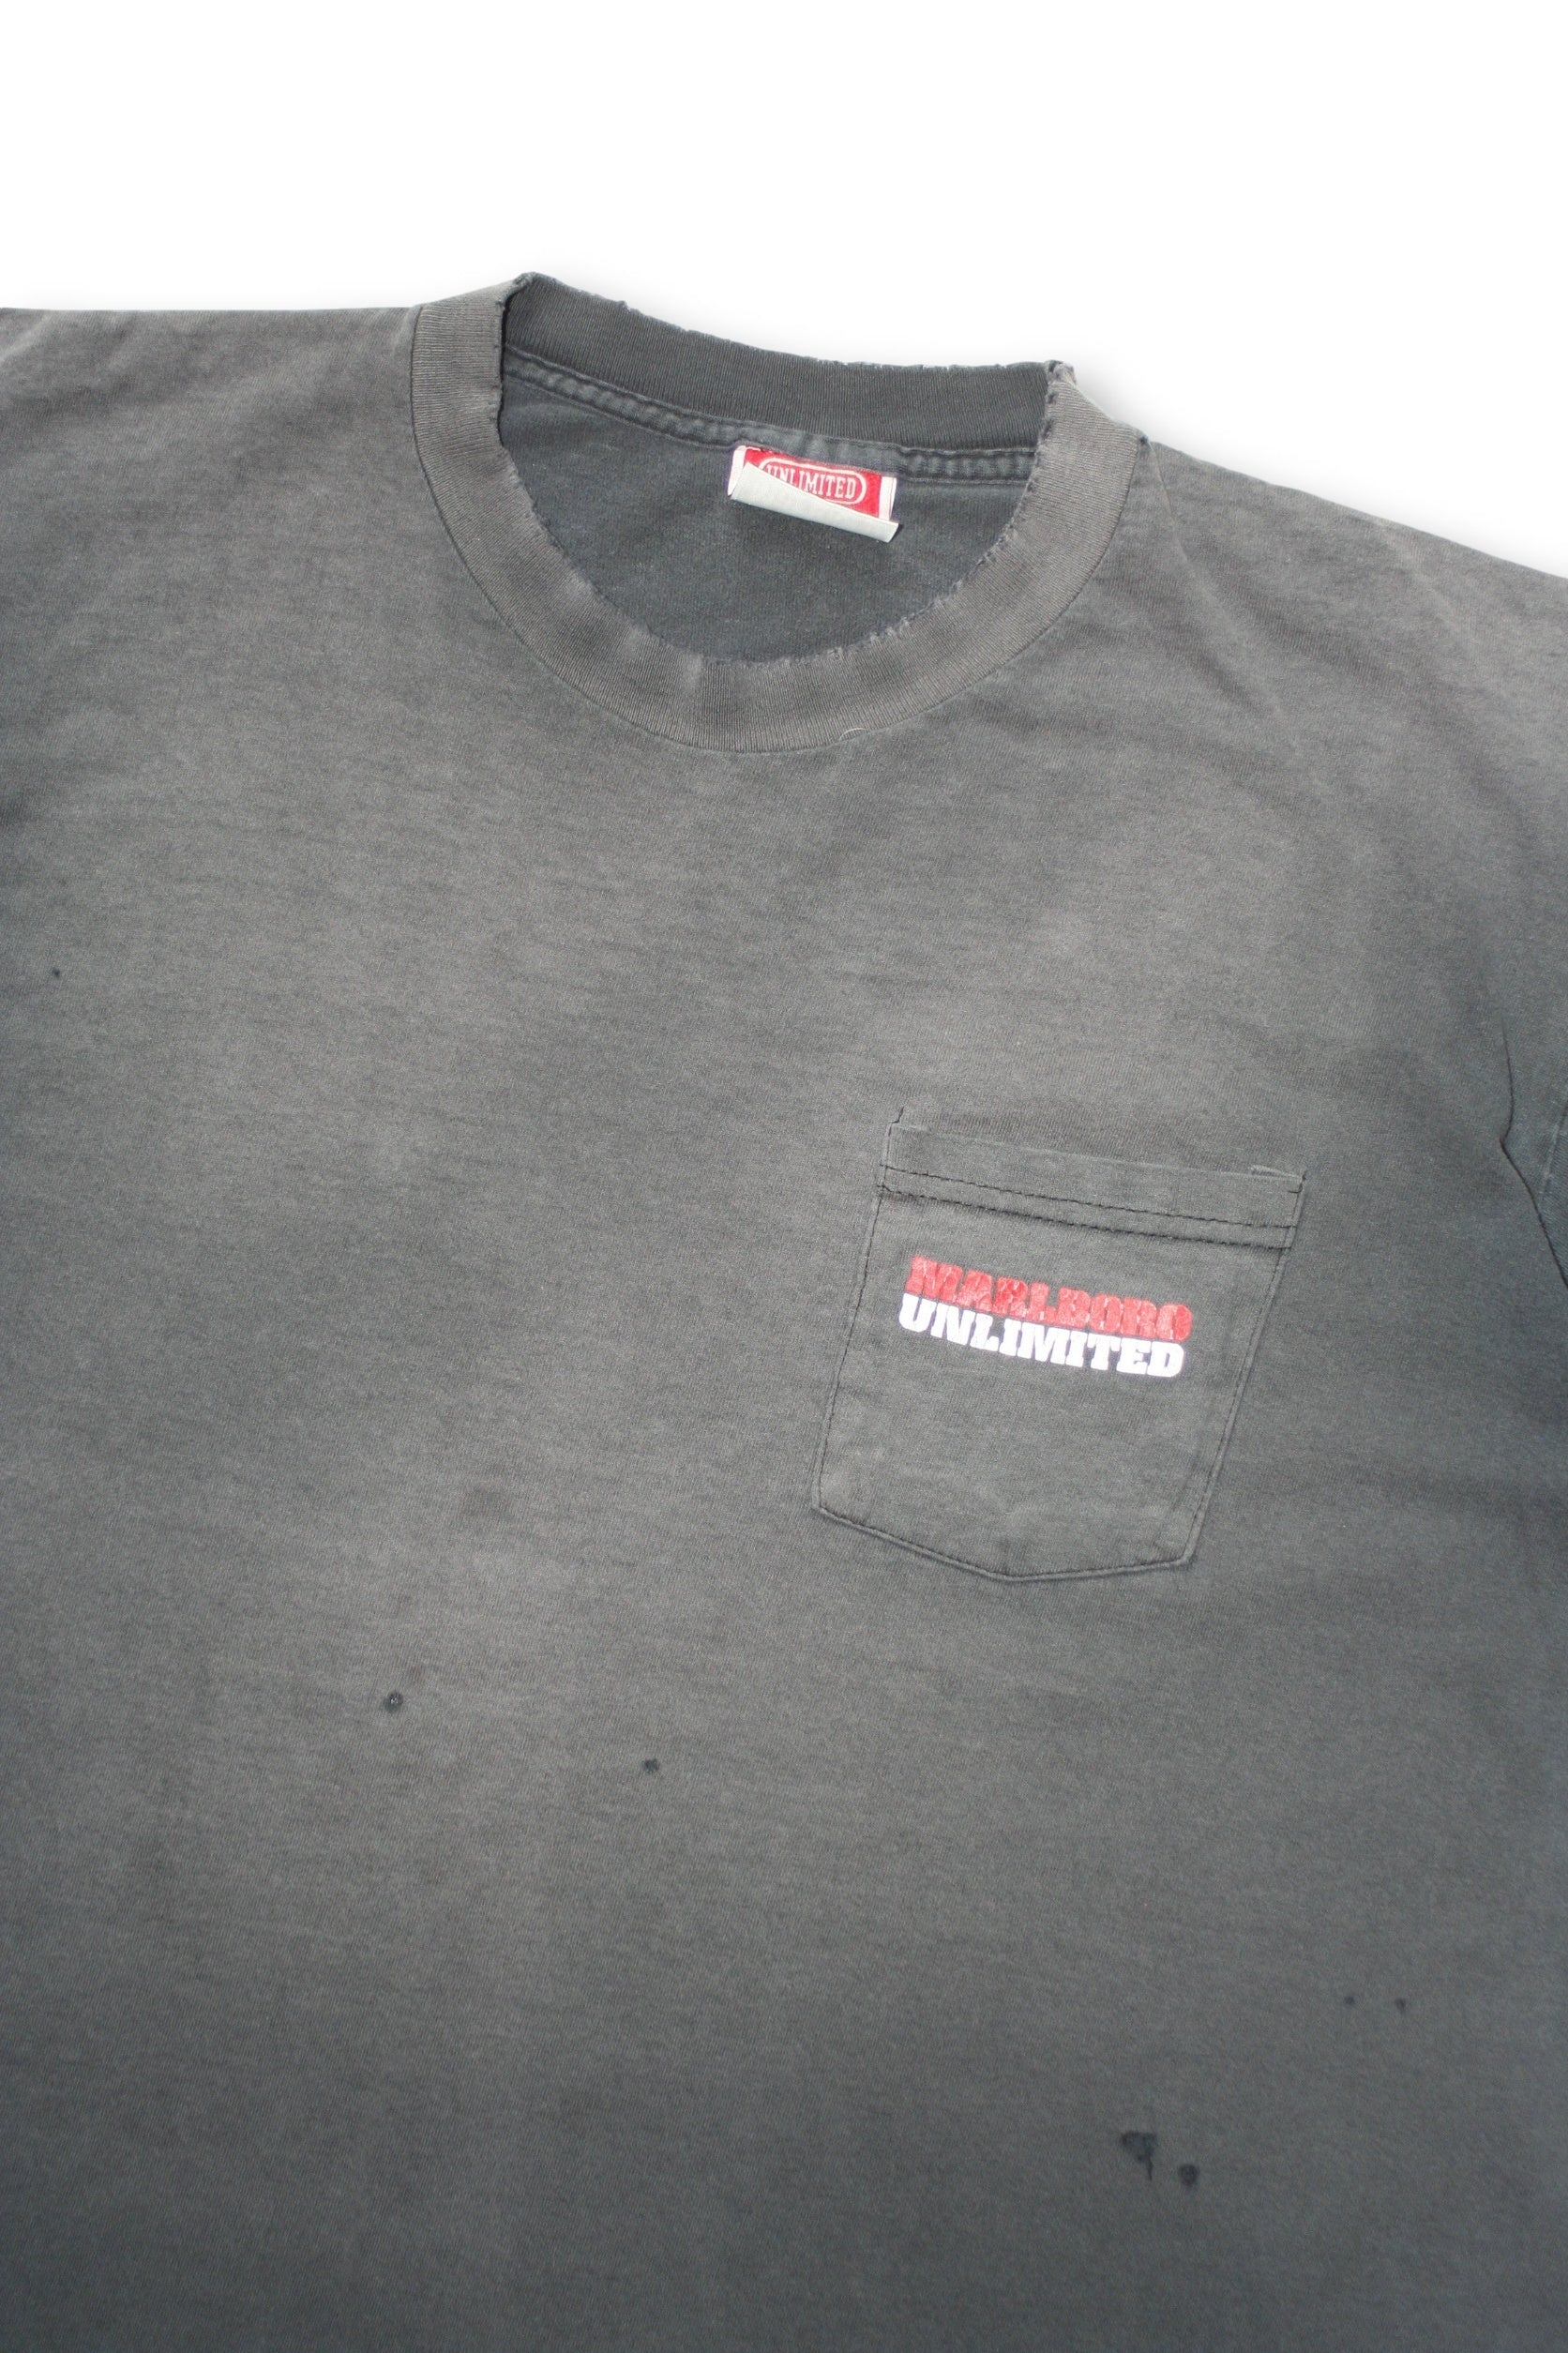 Vintage Thrashed & Faded Marlboro Pocket T-Shirt - L/XL